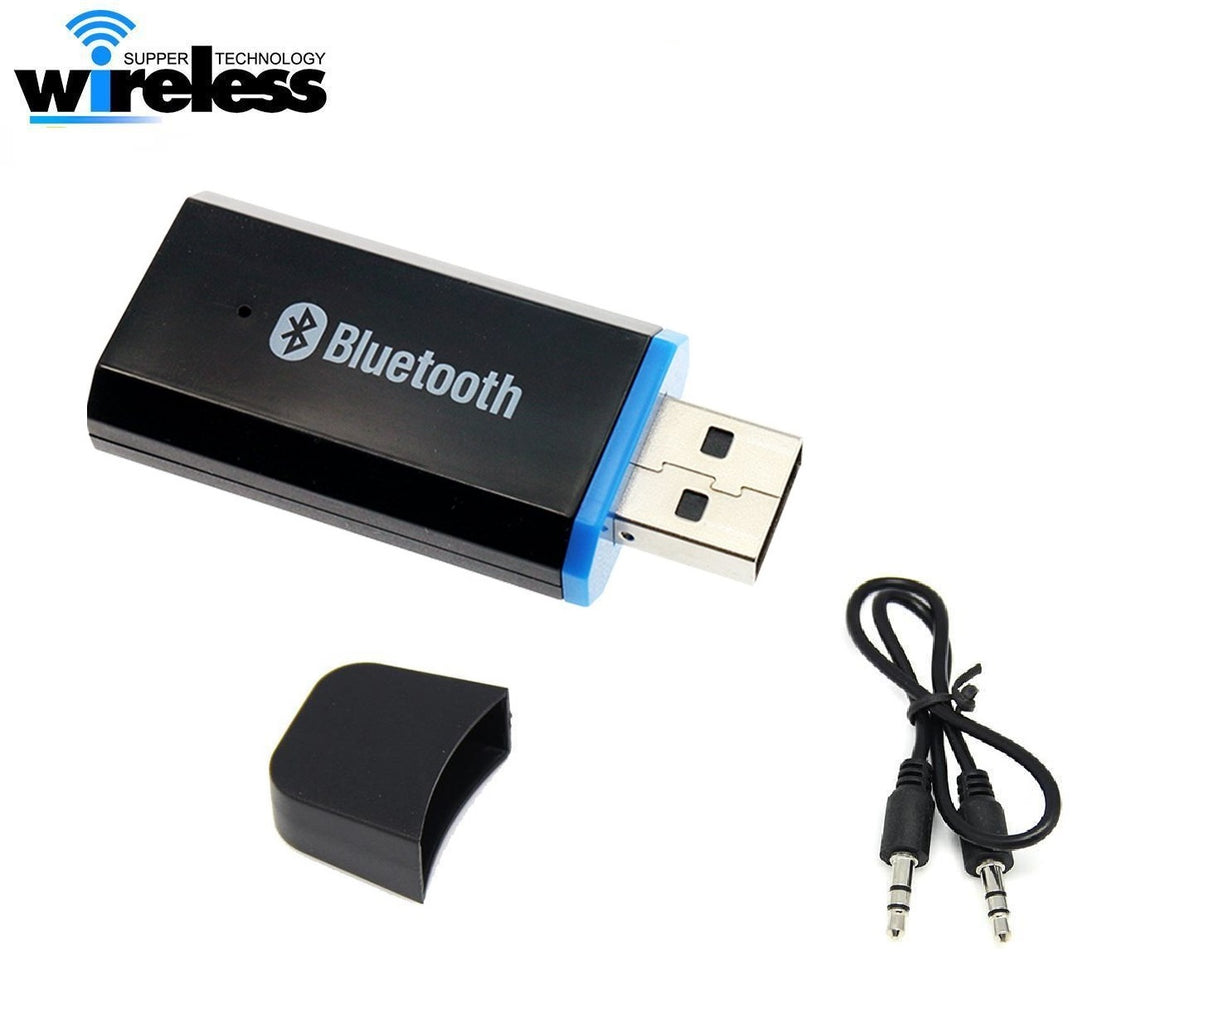 Receptor de Áudio Wireless USB / Jack 3,5mm - Multi4you®